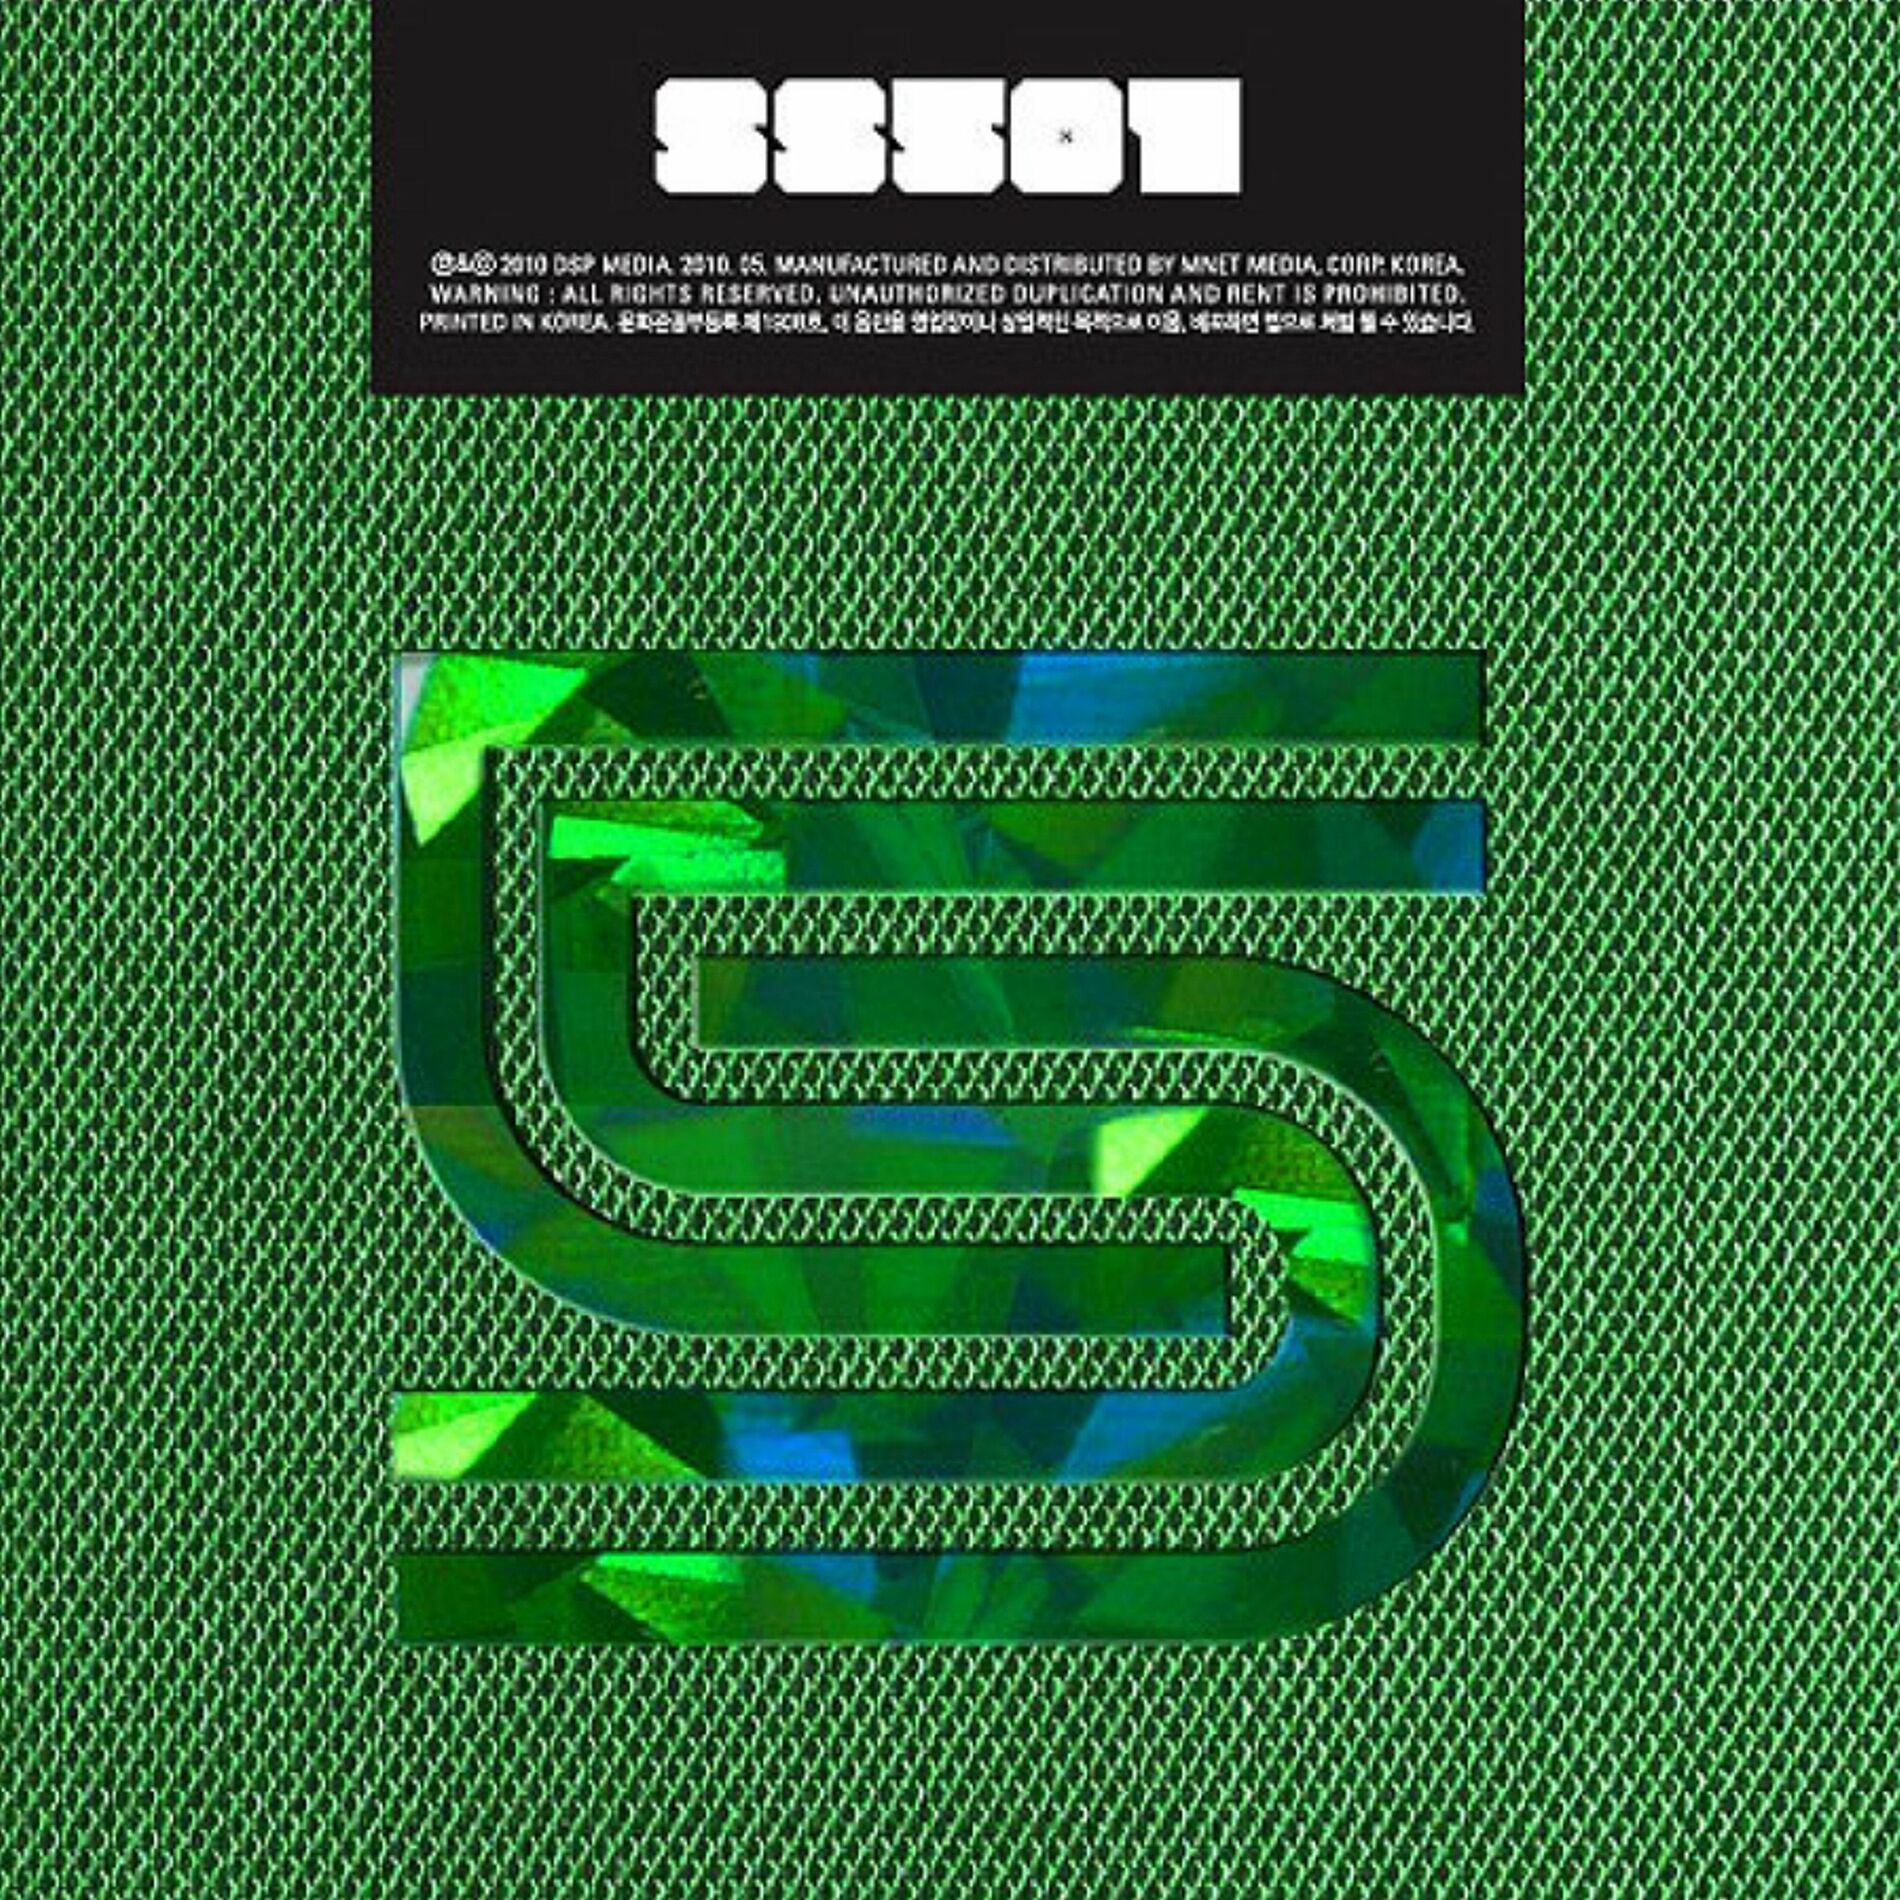 SS501: albums